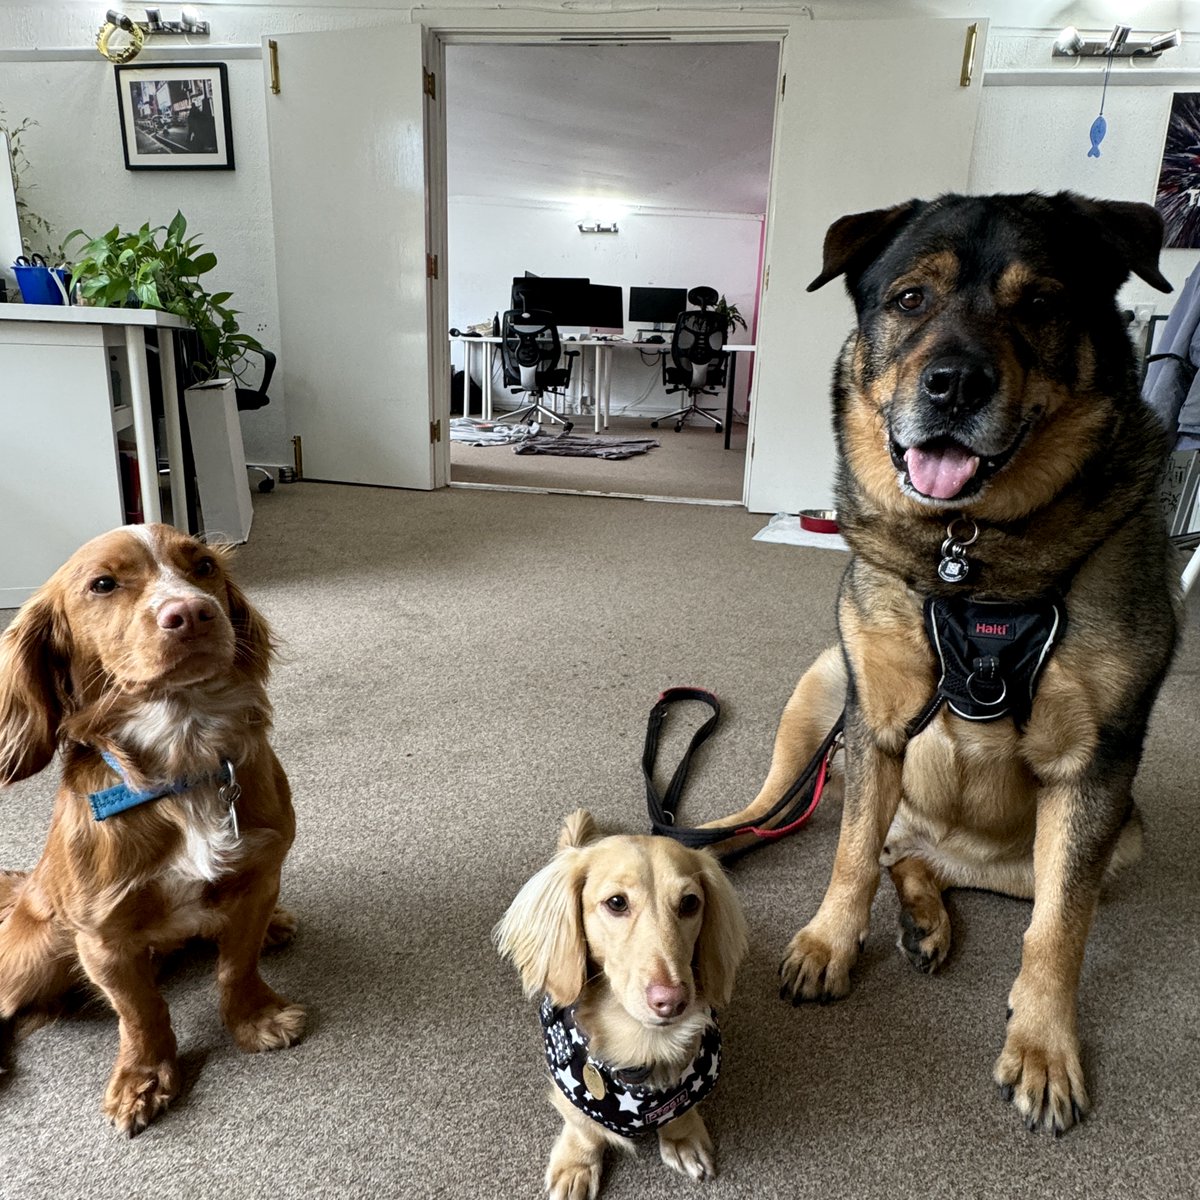 We had 3 good boys in the office this week! Wilf, Dash and Loki or small, medium and large?🐶🐕🐾 #OfficeDoggos #GoodBoys #Dogs #CockerSpaniel #Dachsund #HuskyCrossGermanShepherd